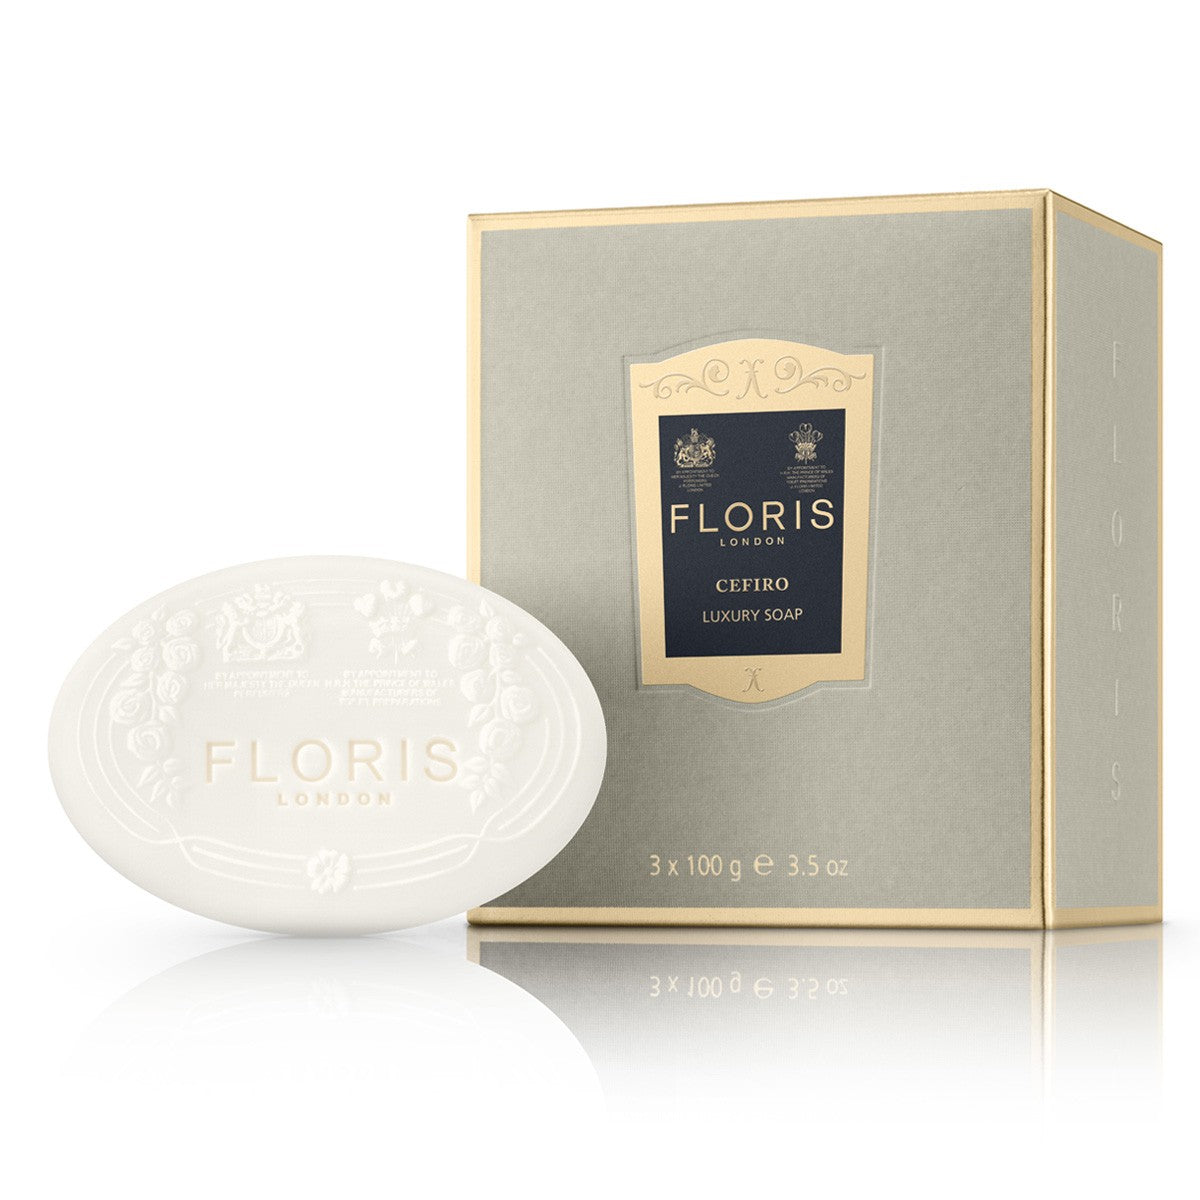 FLORIS Cefiro Luxury Soap